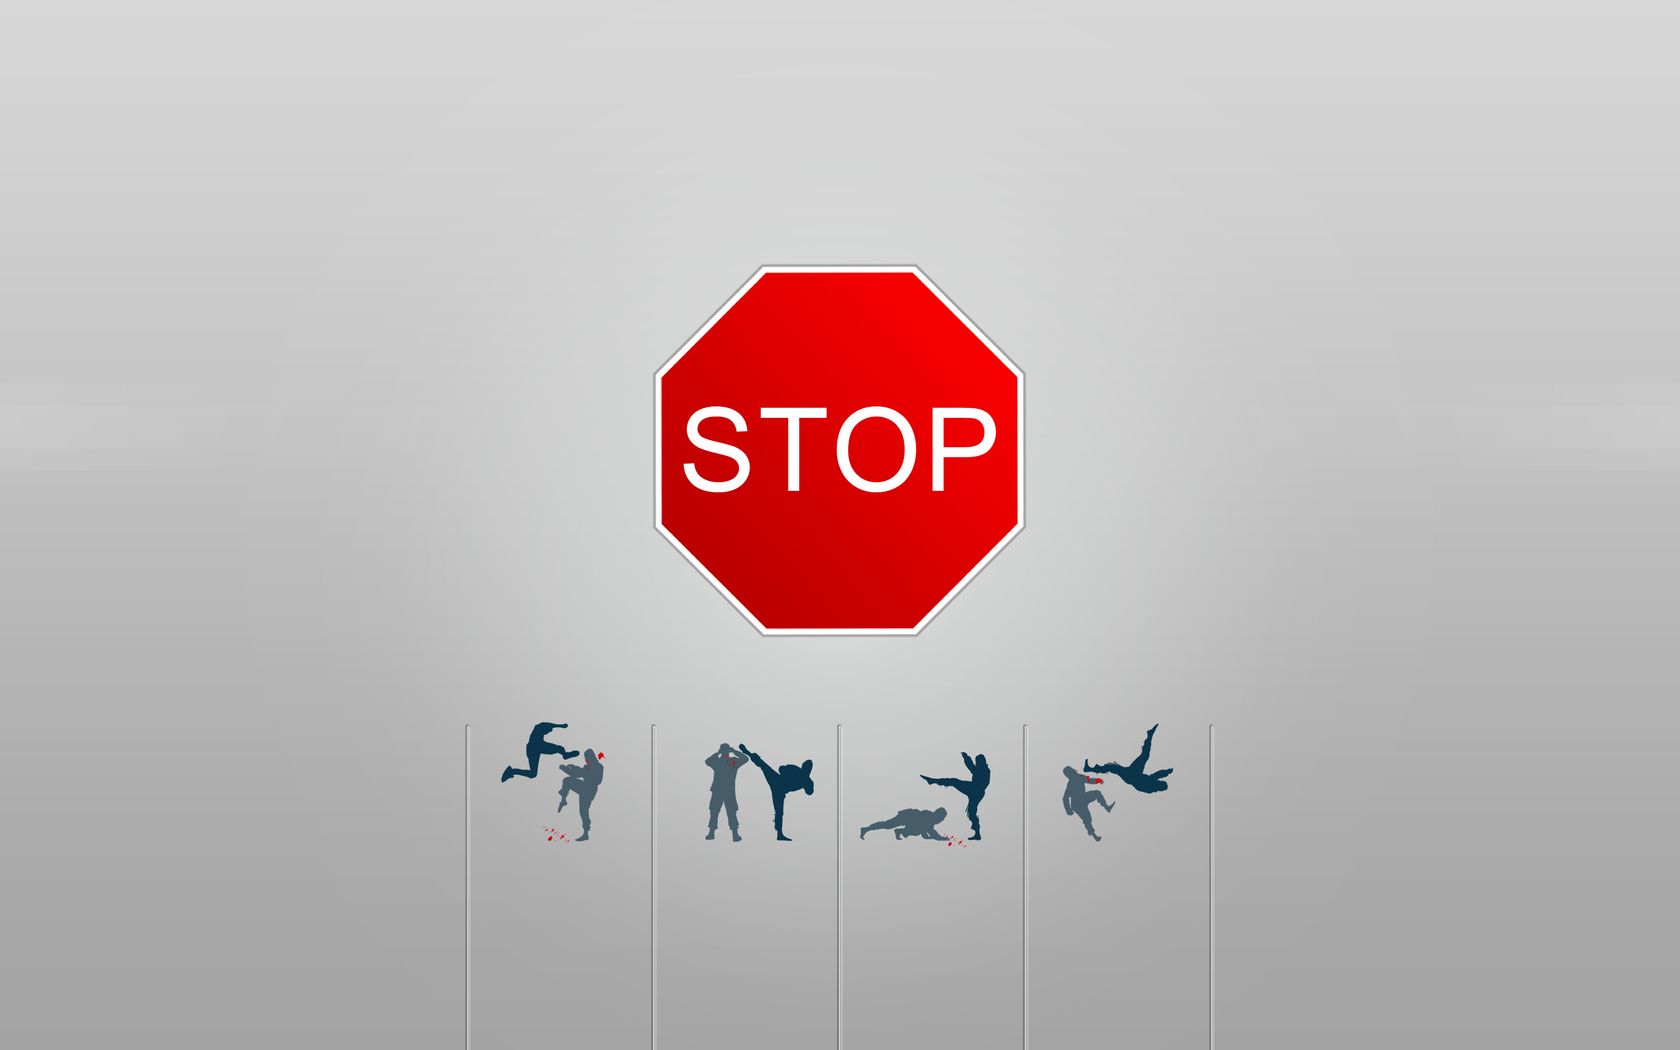 Stop The Violence Wallpaper. Stop Looking At My Screen Wallpaper, Non Stop Wallpaper And Stop Watch Wallpaper